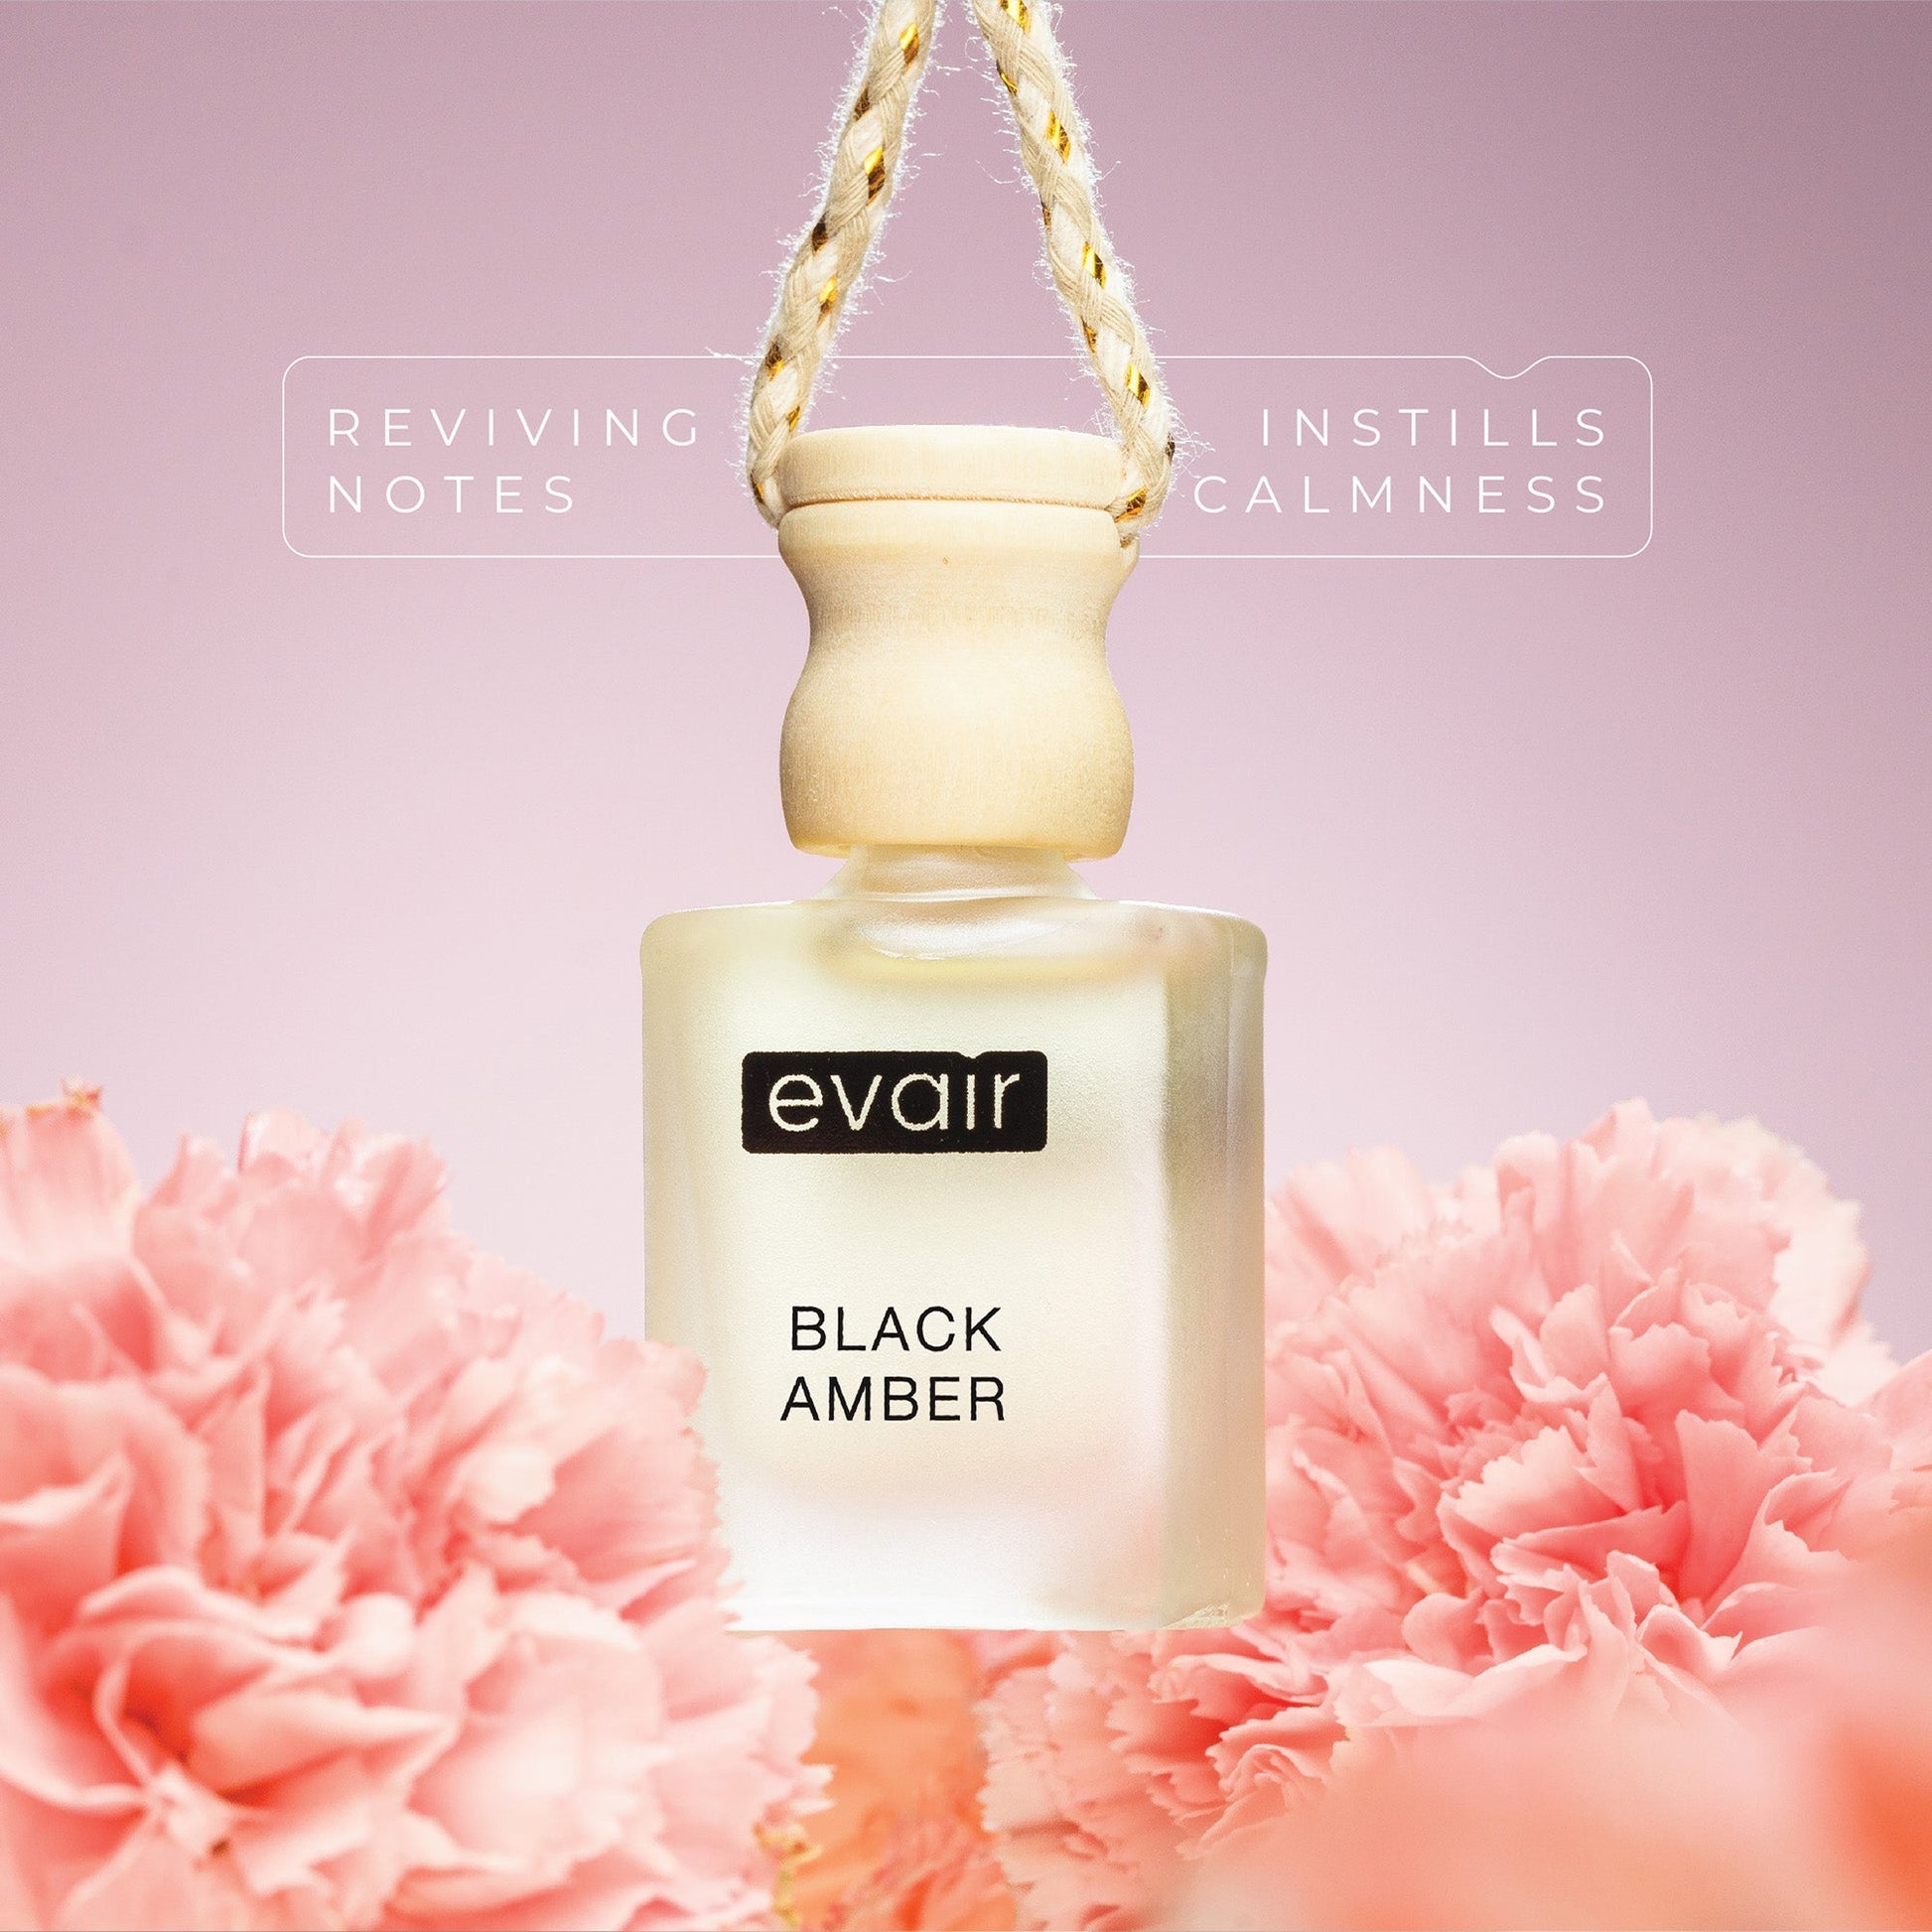 Evair Black Amber Car Perfume Glass Bottle wiith flowers